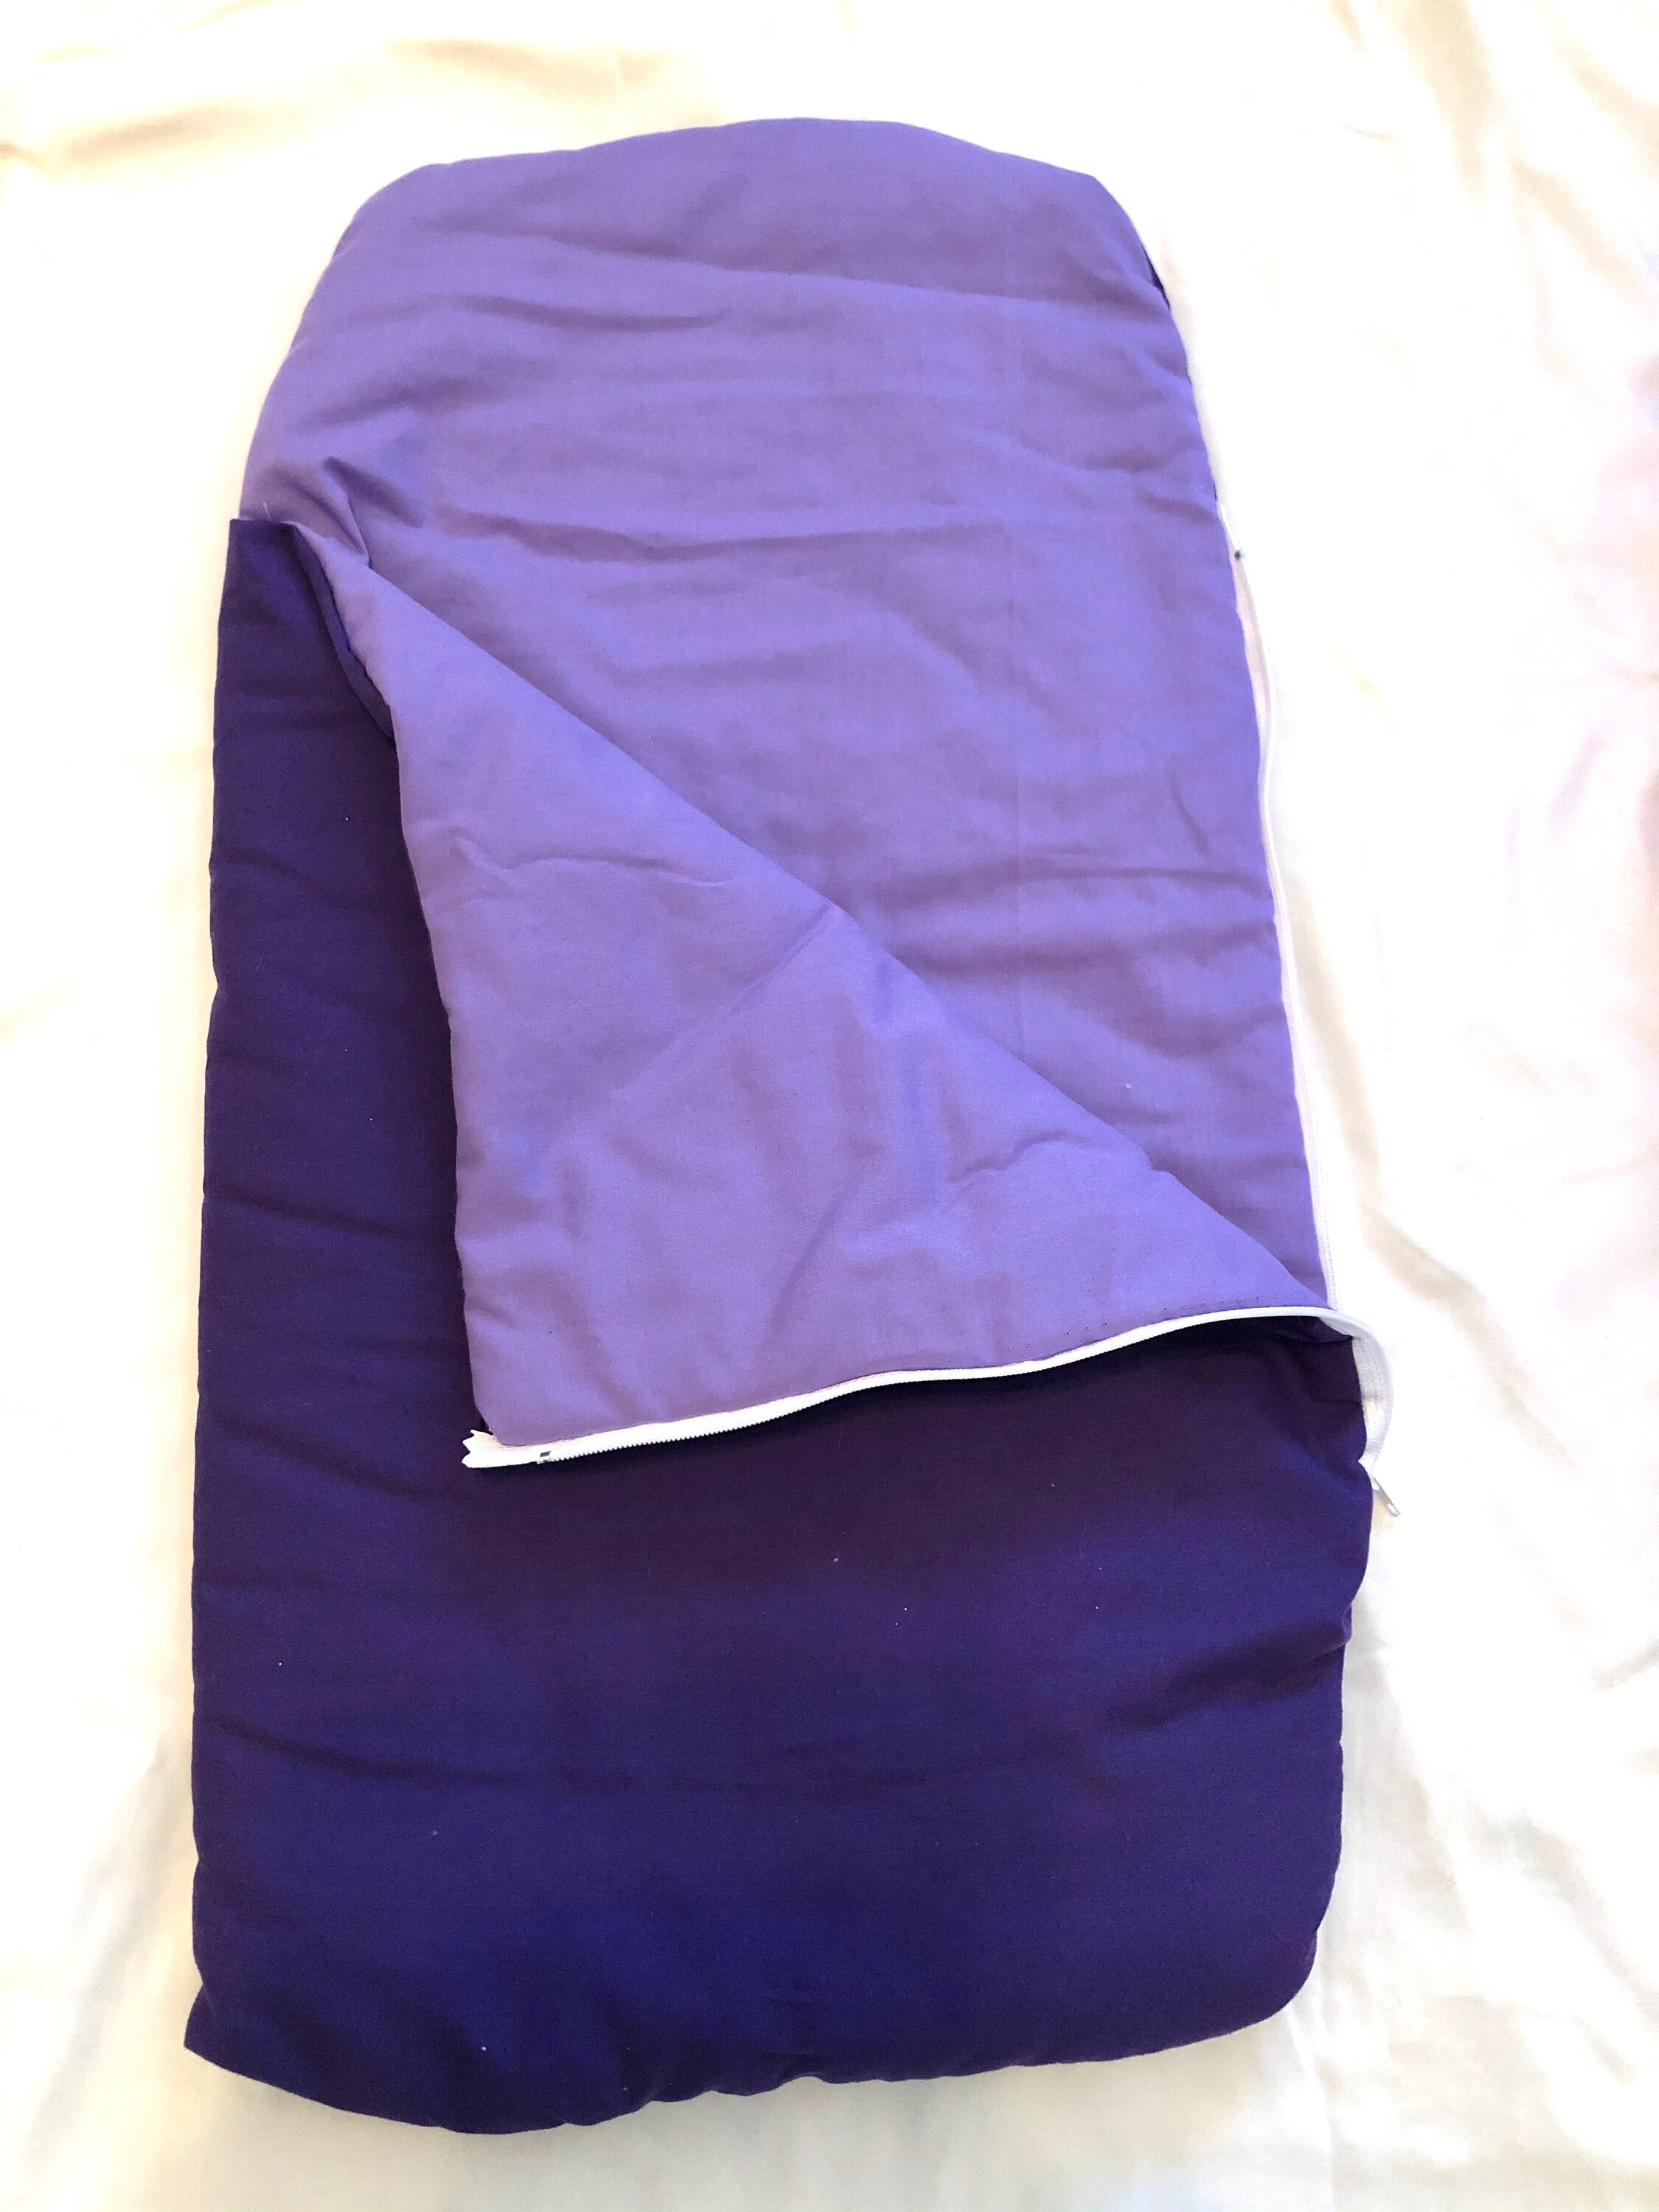 18 Doll Sleeping Bag in 2 tone purple | Etsy